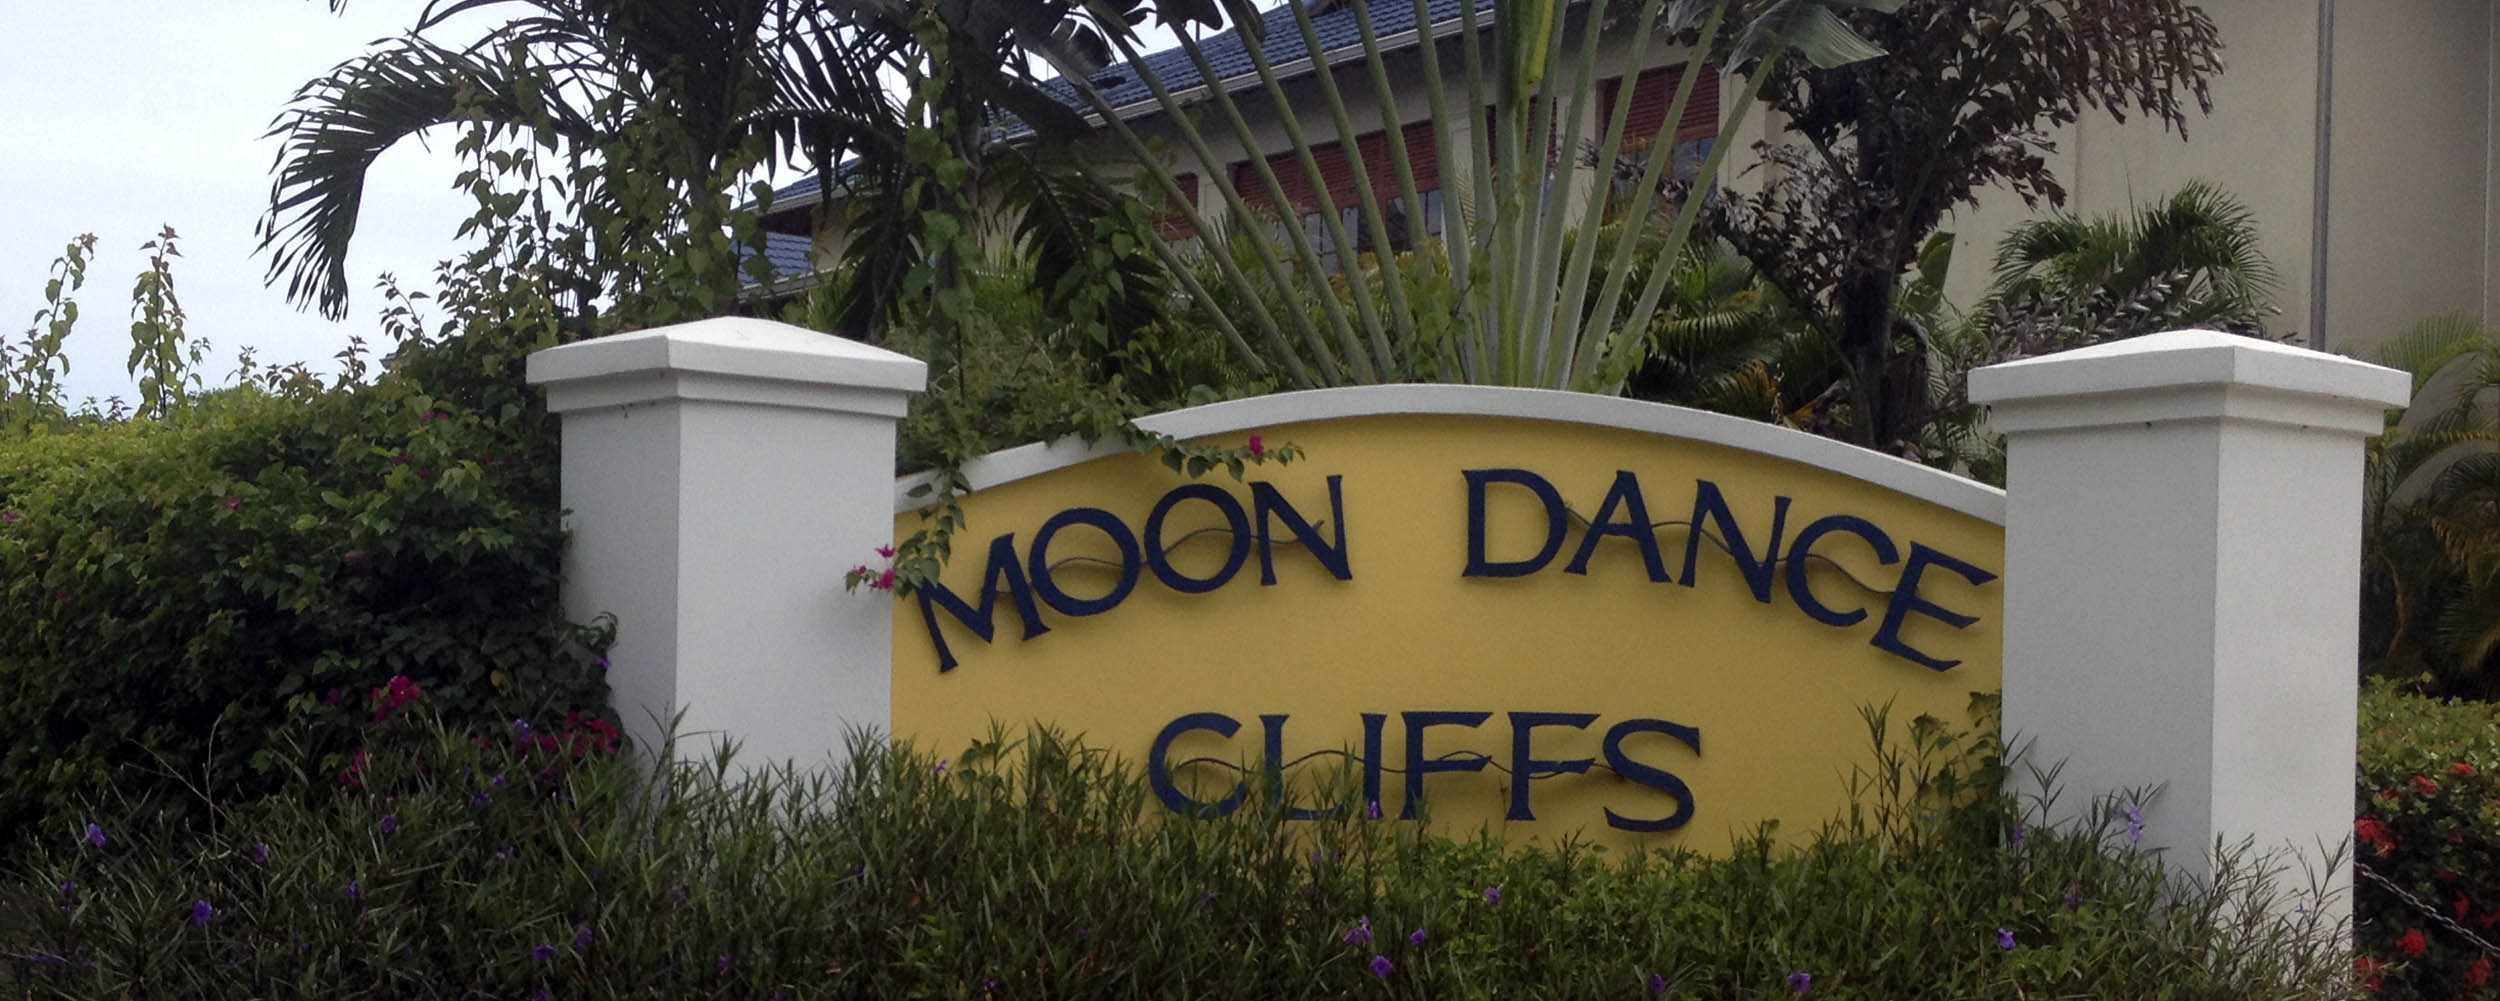 Moon Dance Cliffs - Negril Jamaica